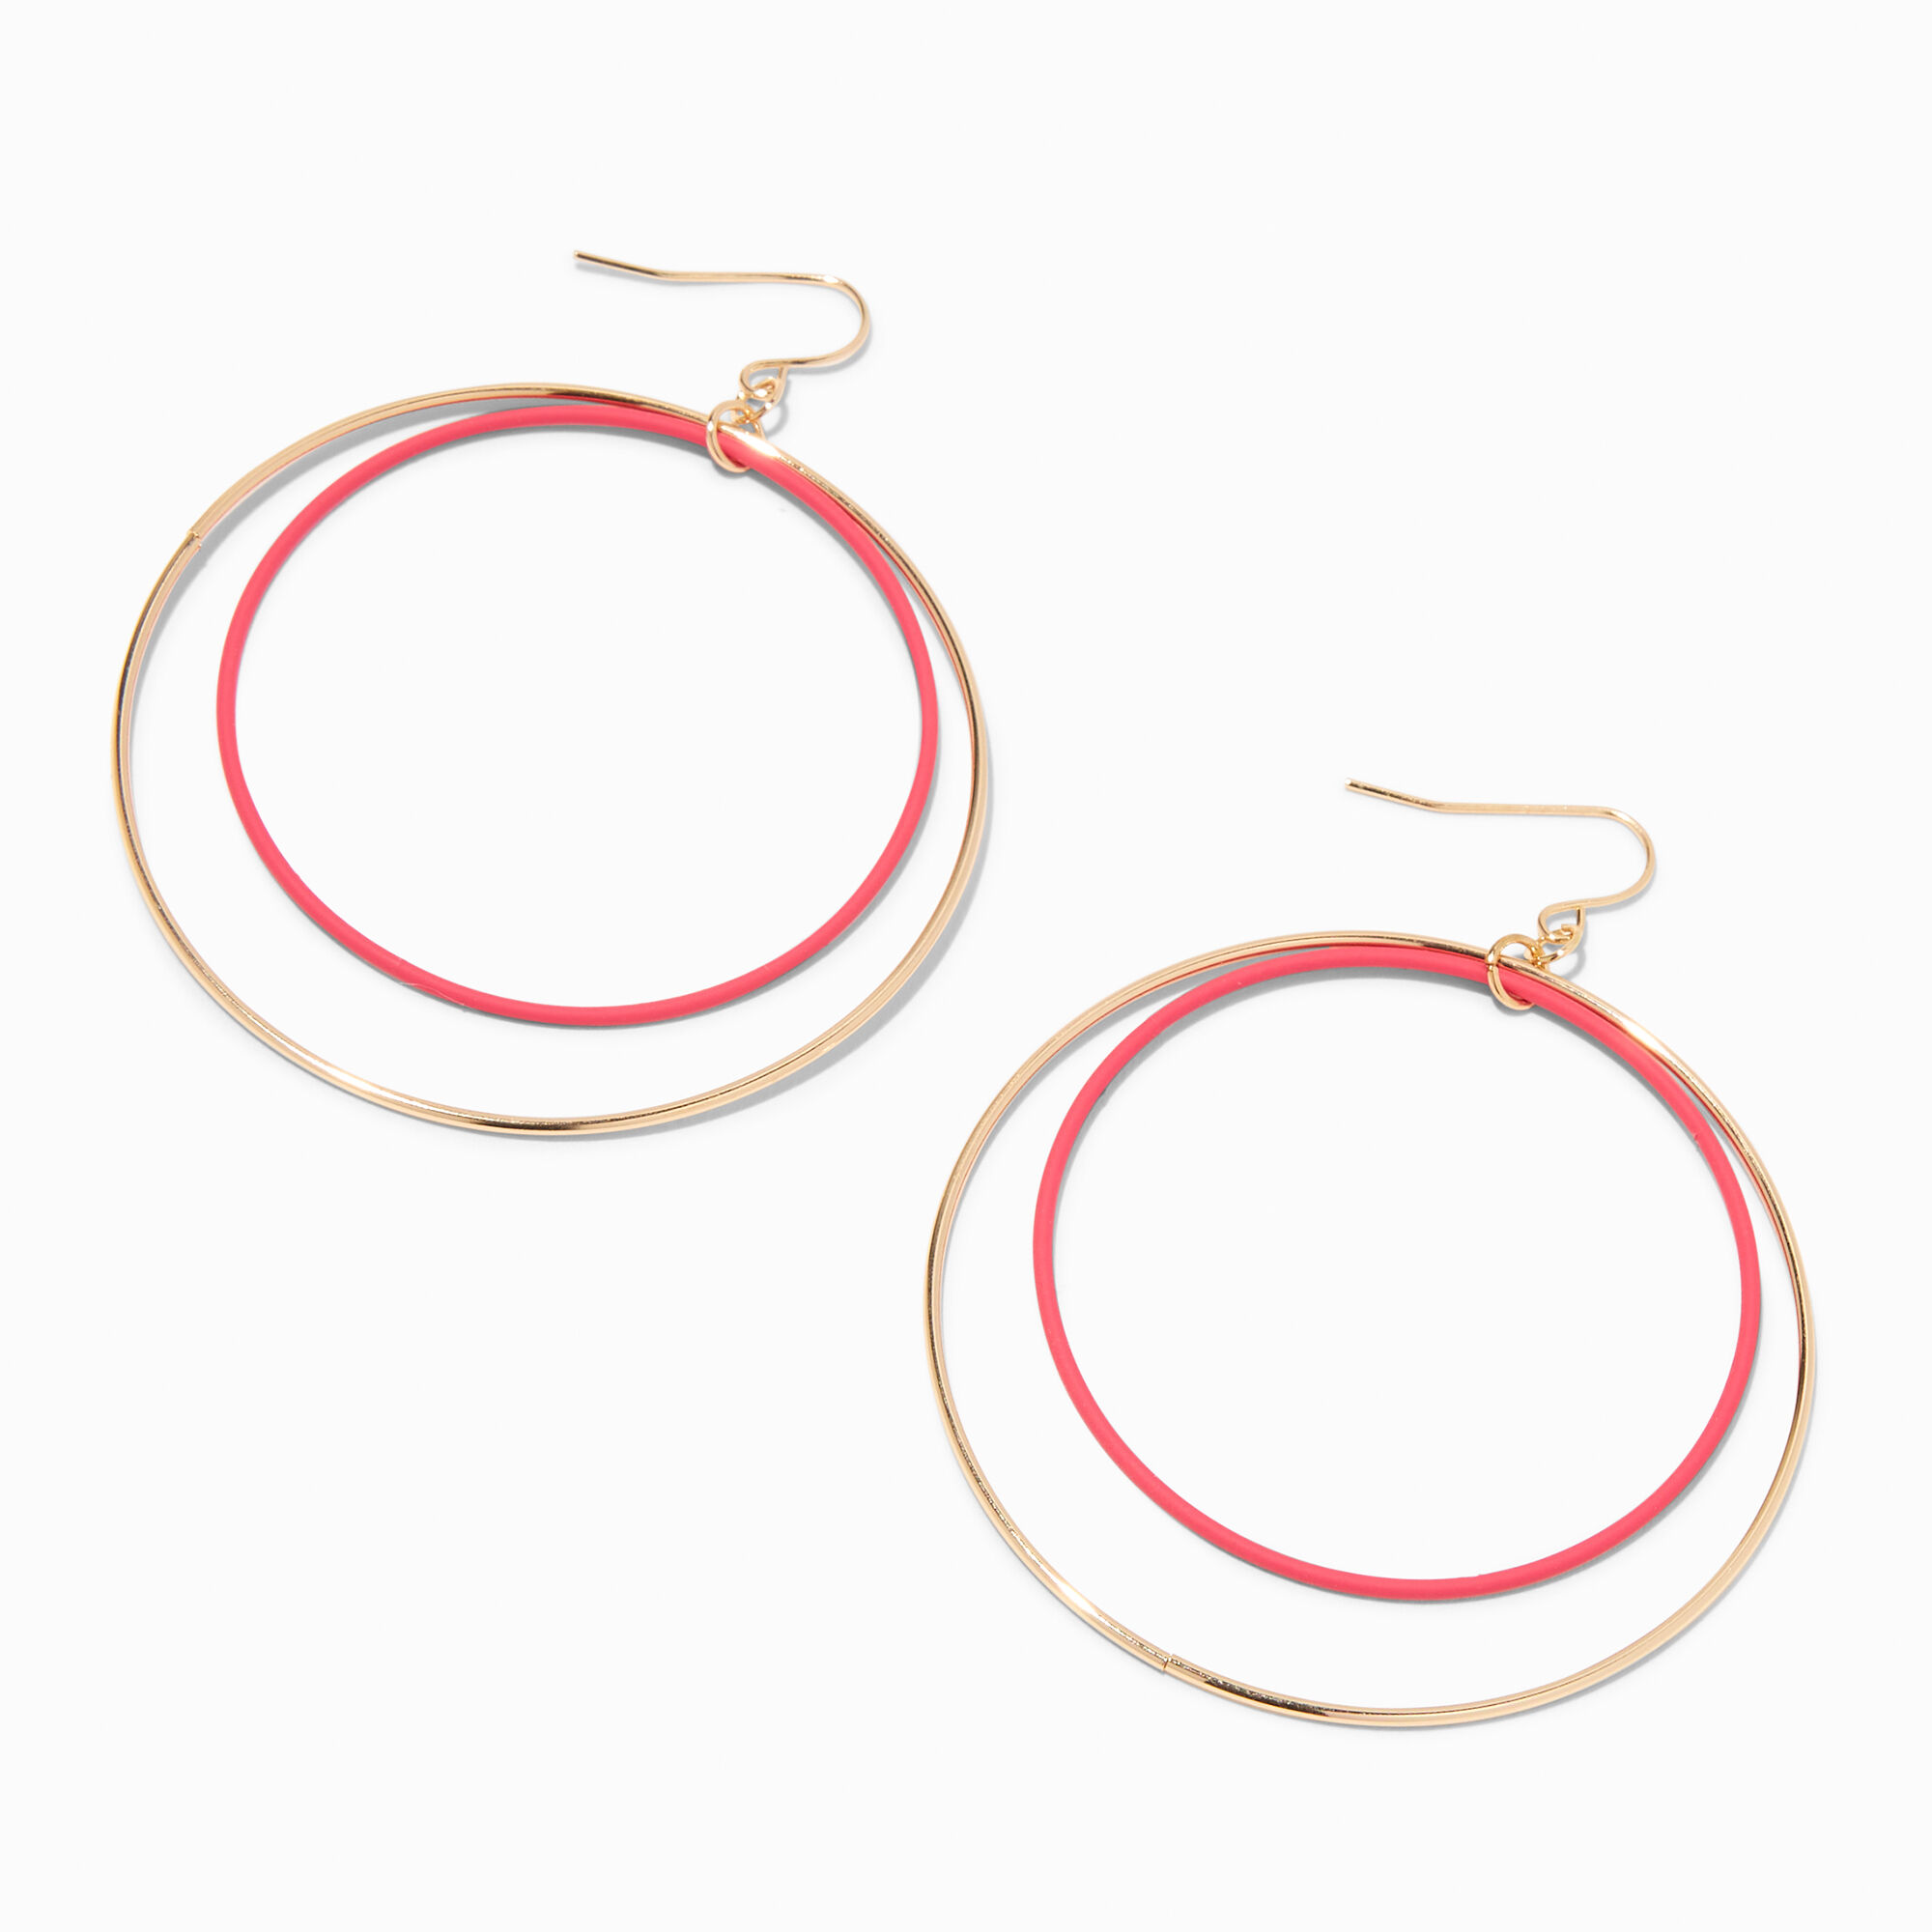 View Claires GoldTone 3 Enamel Double Ring Hoop Drop Earrings Pink information